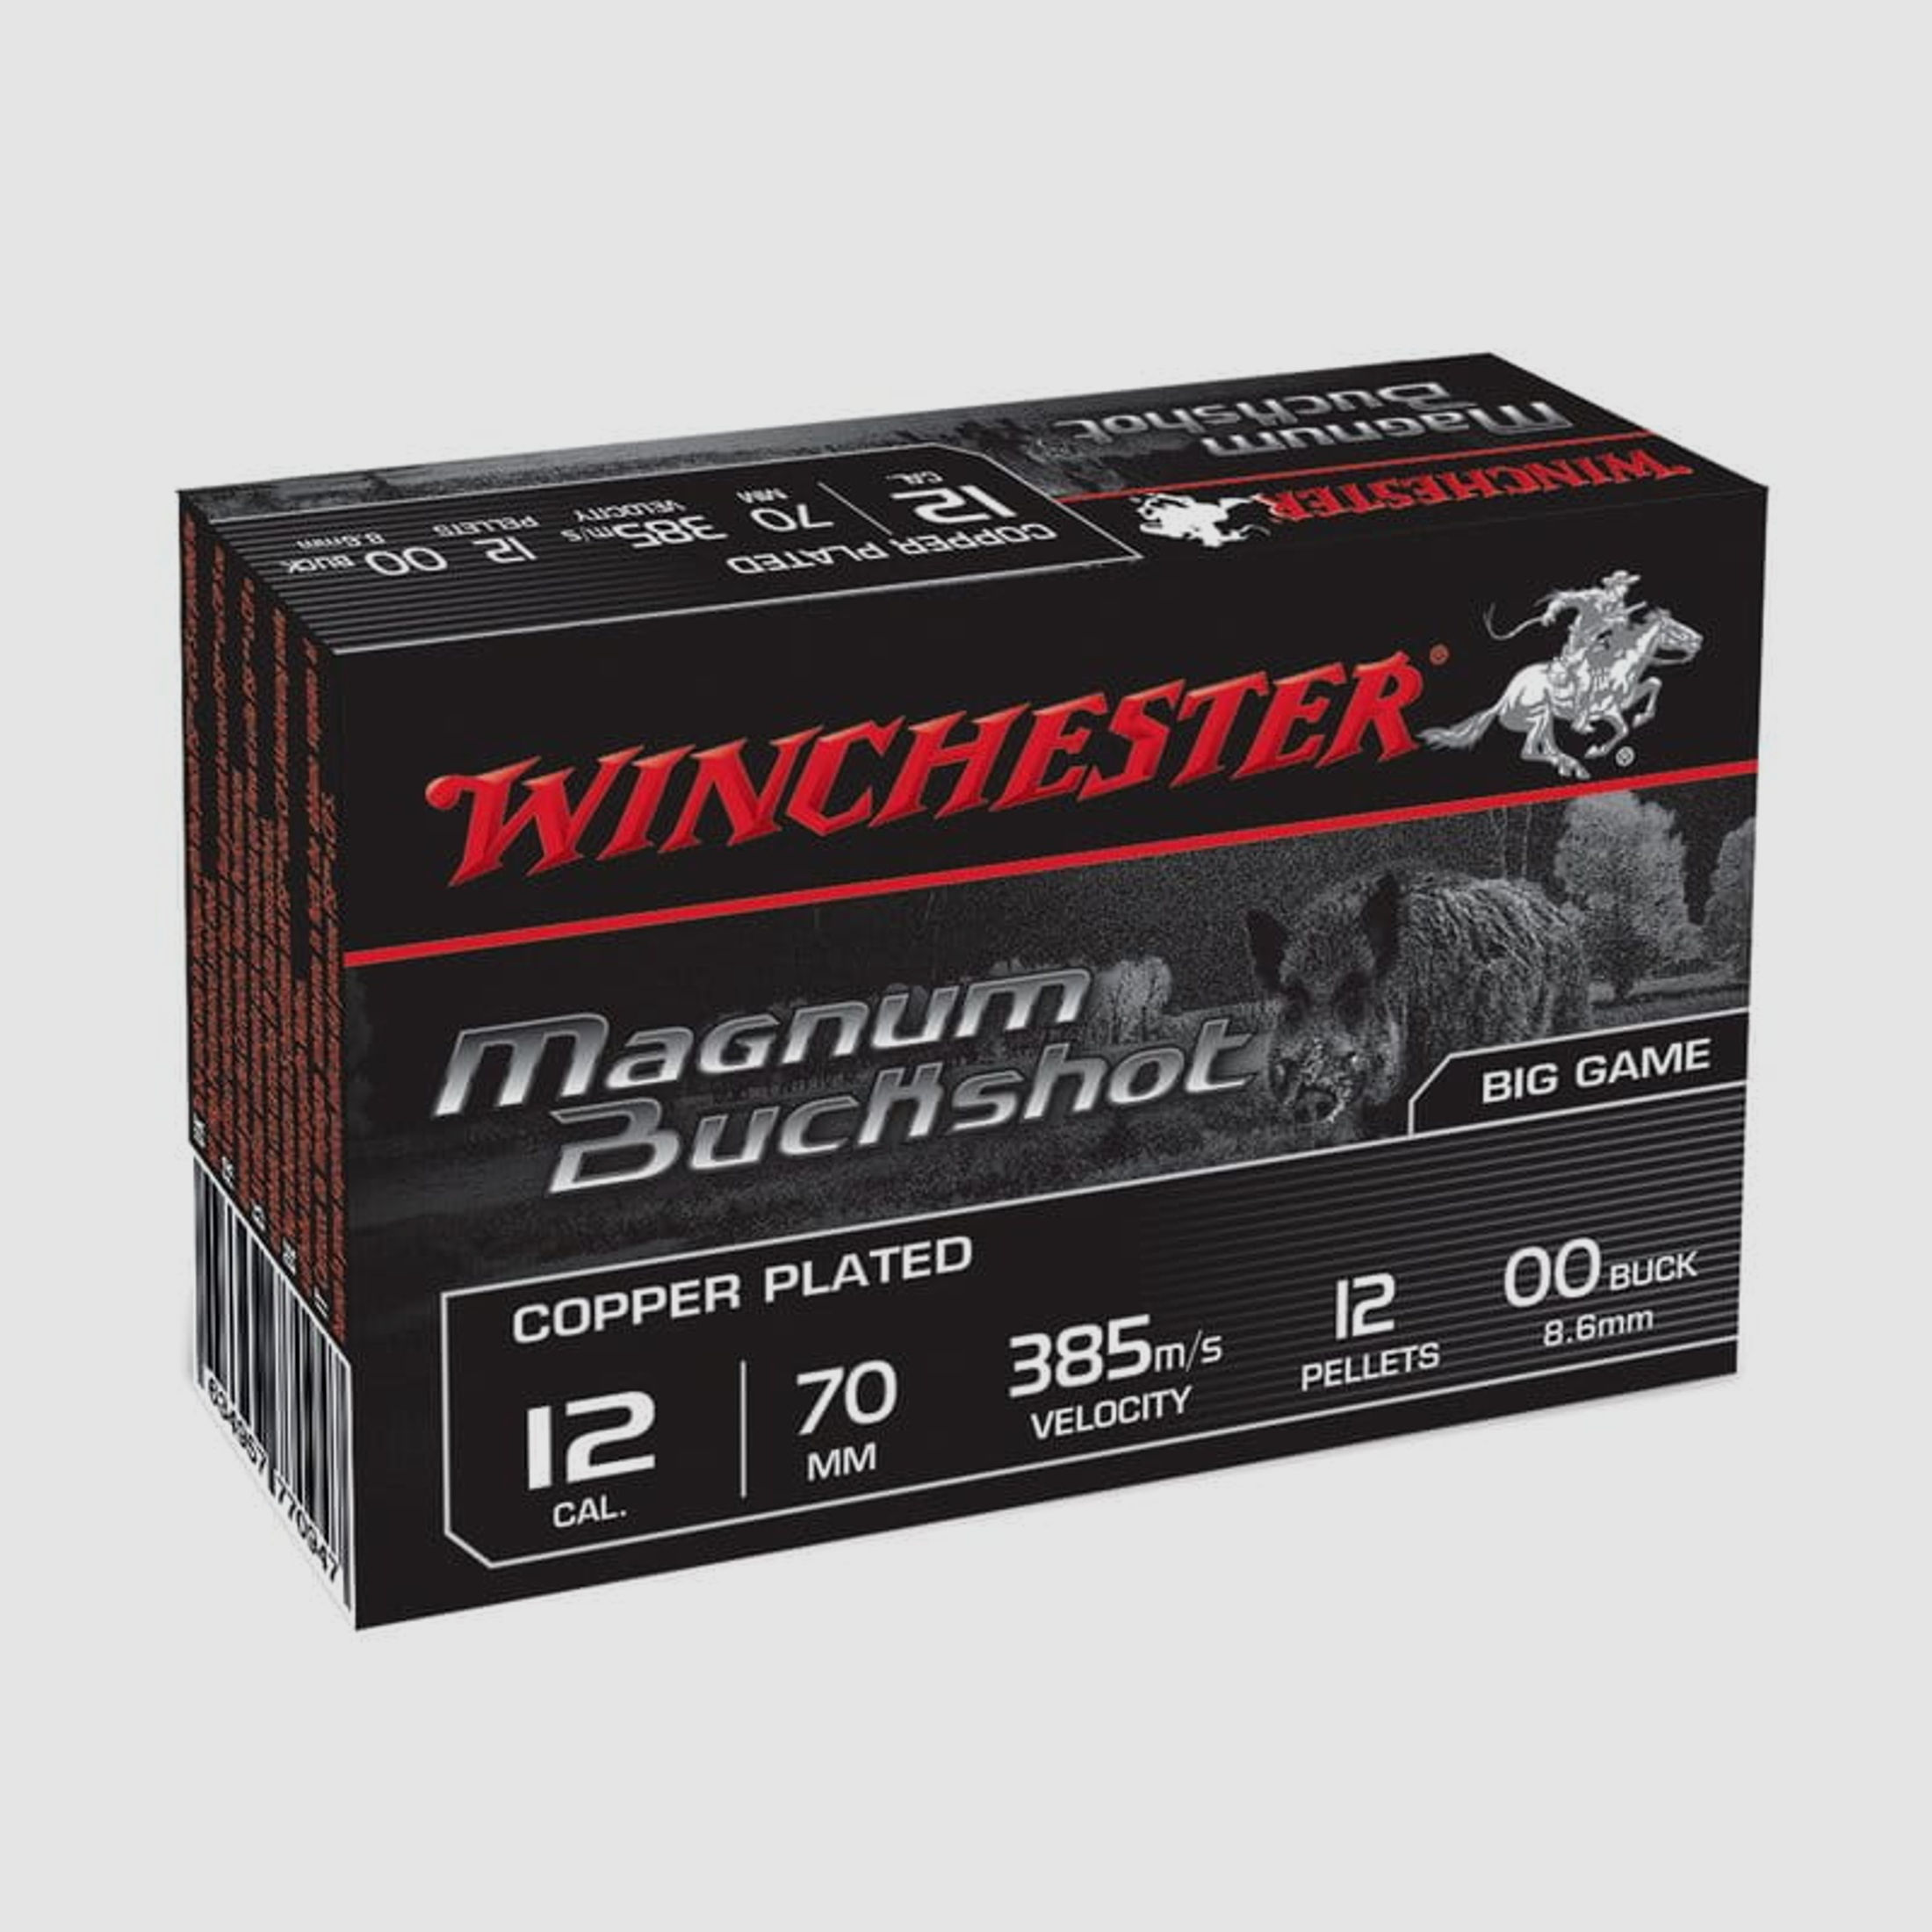 Winchester Magnum Buckshot 8,6mm Kal 12/70 5 Stk.